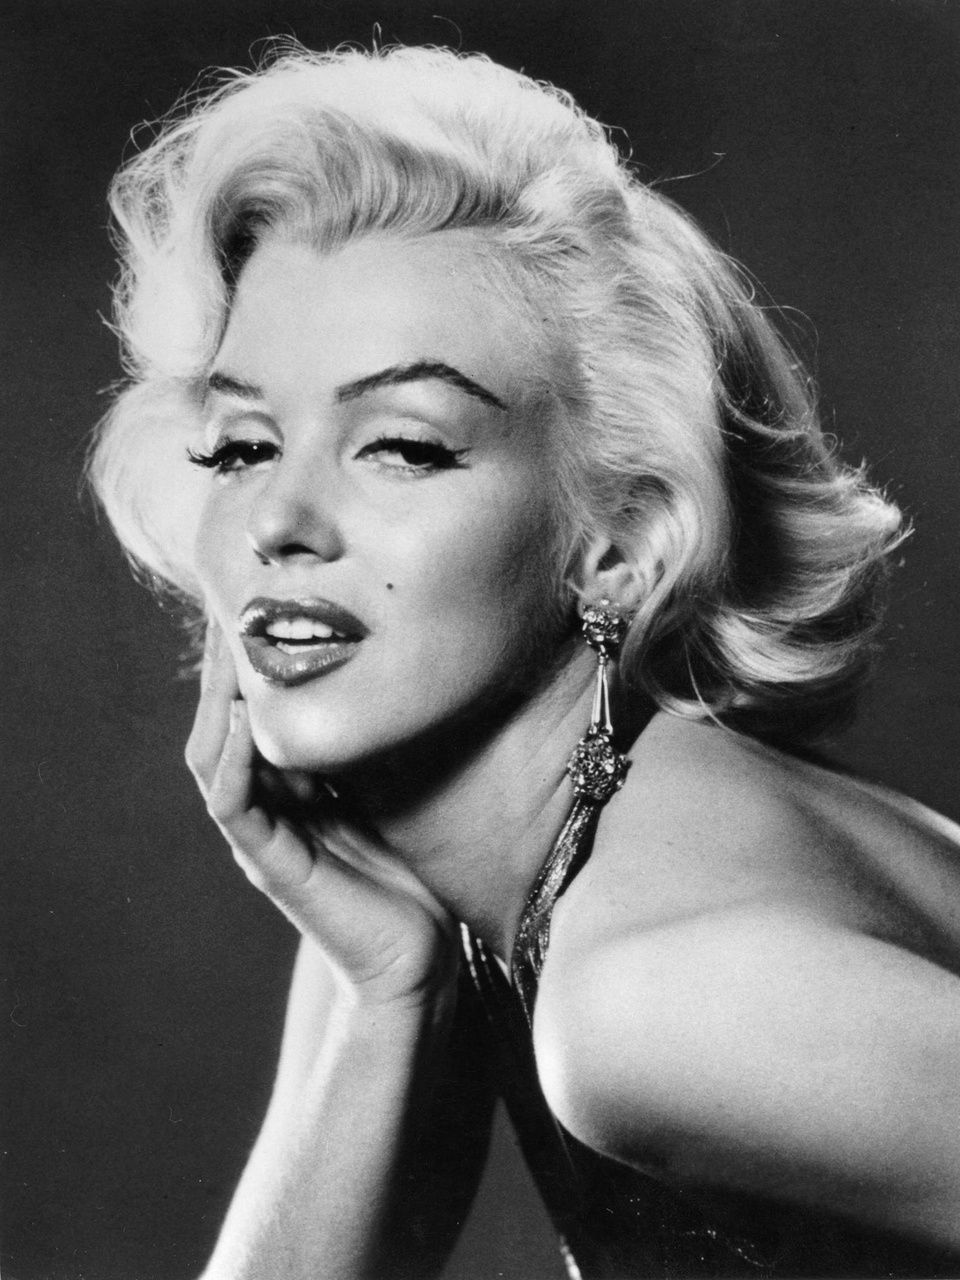 Marilyn Monroe, Full HD Wallpapers gratis - Fondos de pantalla y